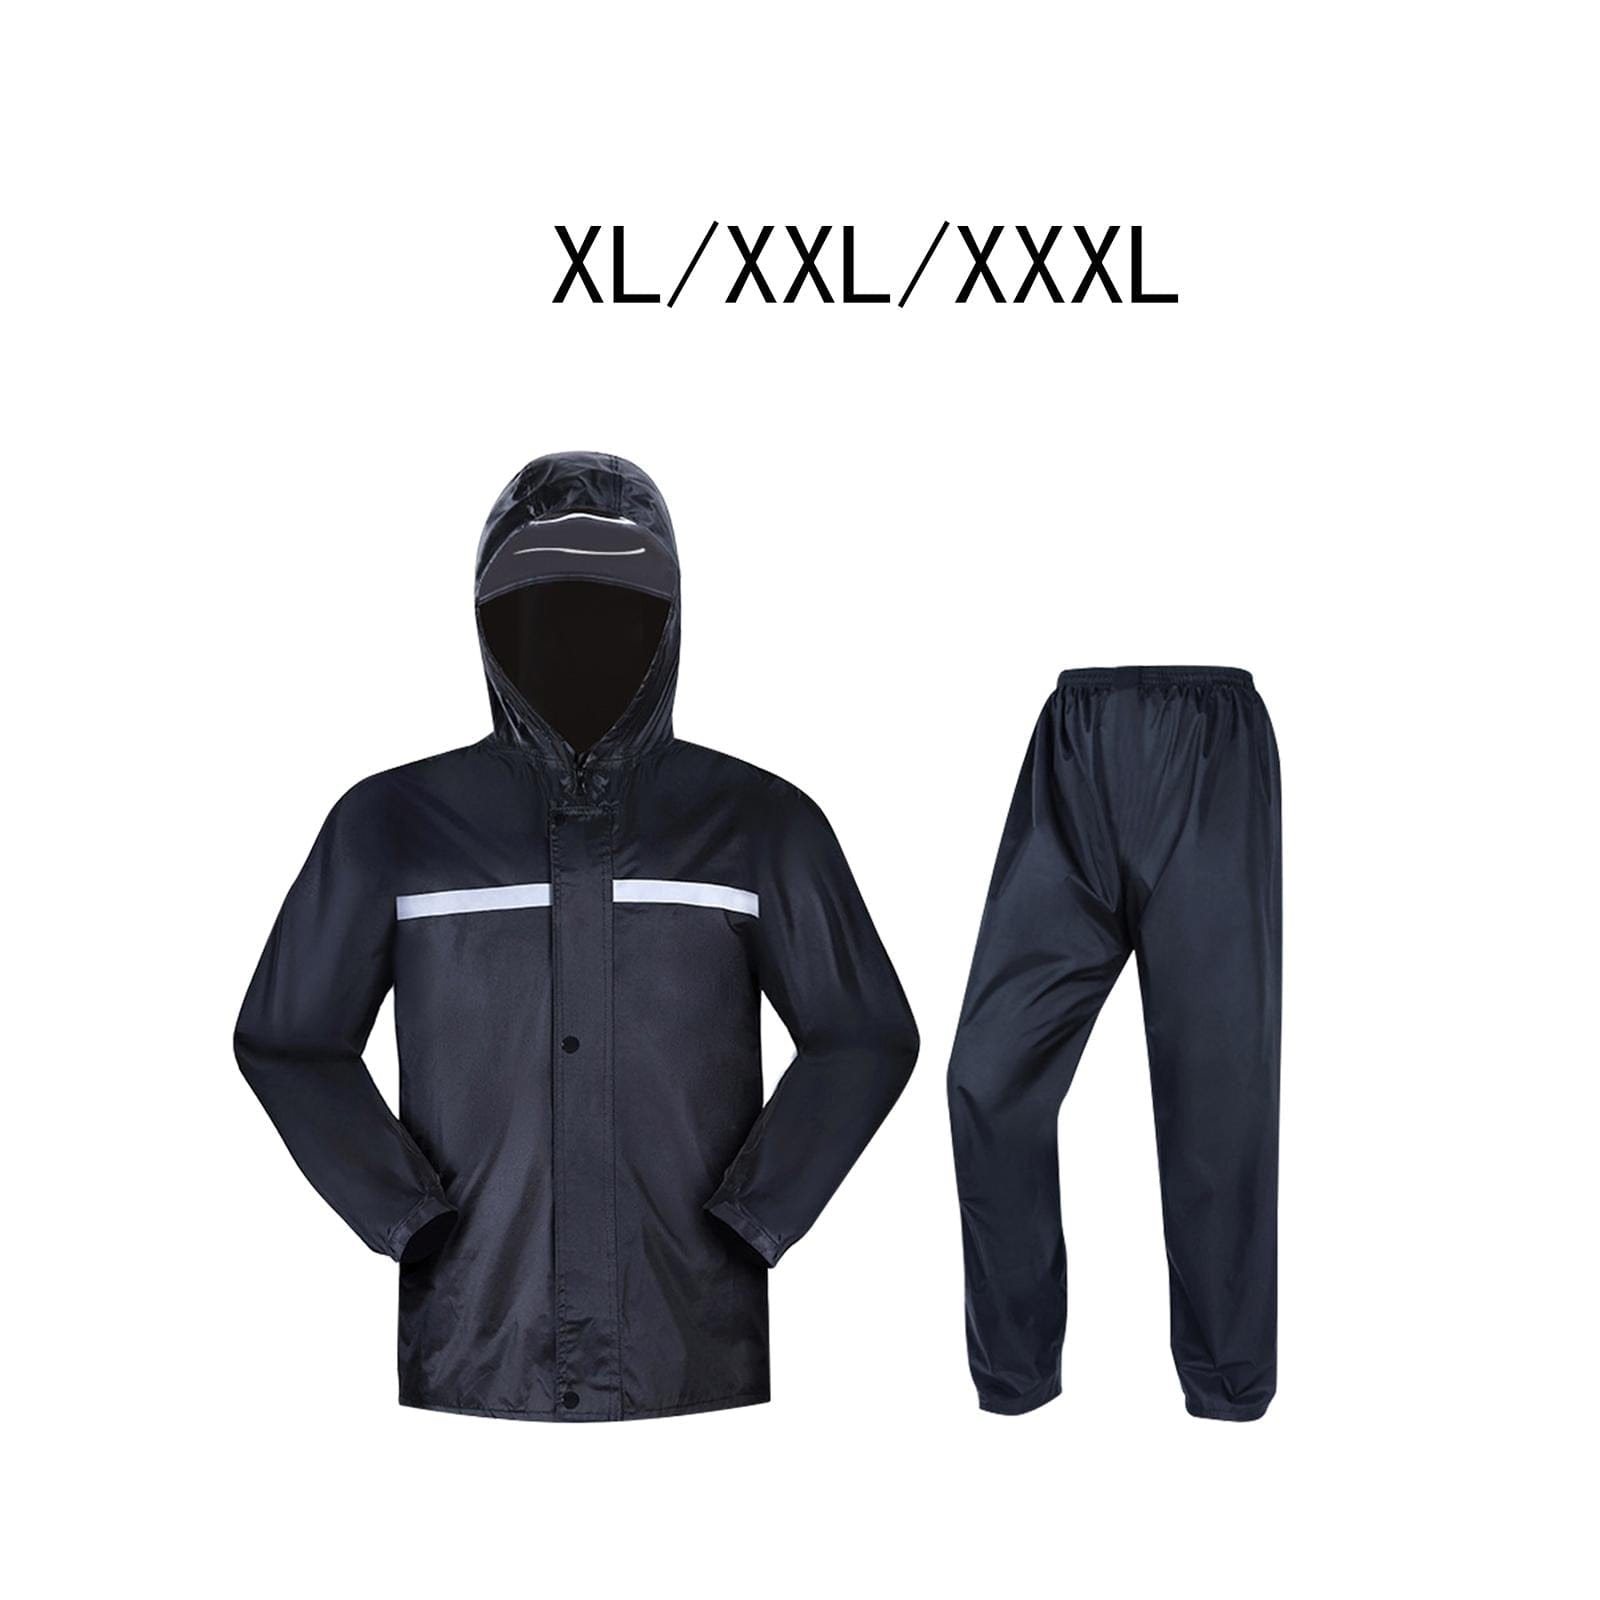 MIERSPORT Rain Suit Waterproof Jacket Breathable Rain Coat Pants Adults Women Men, XL